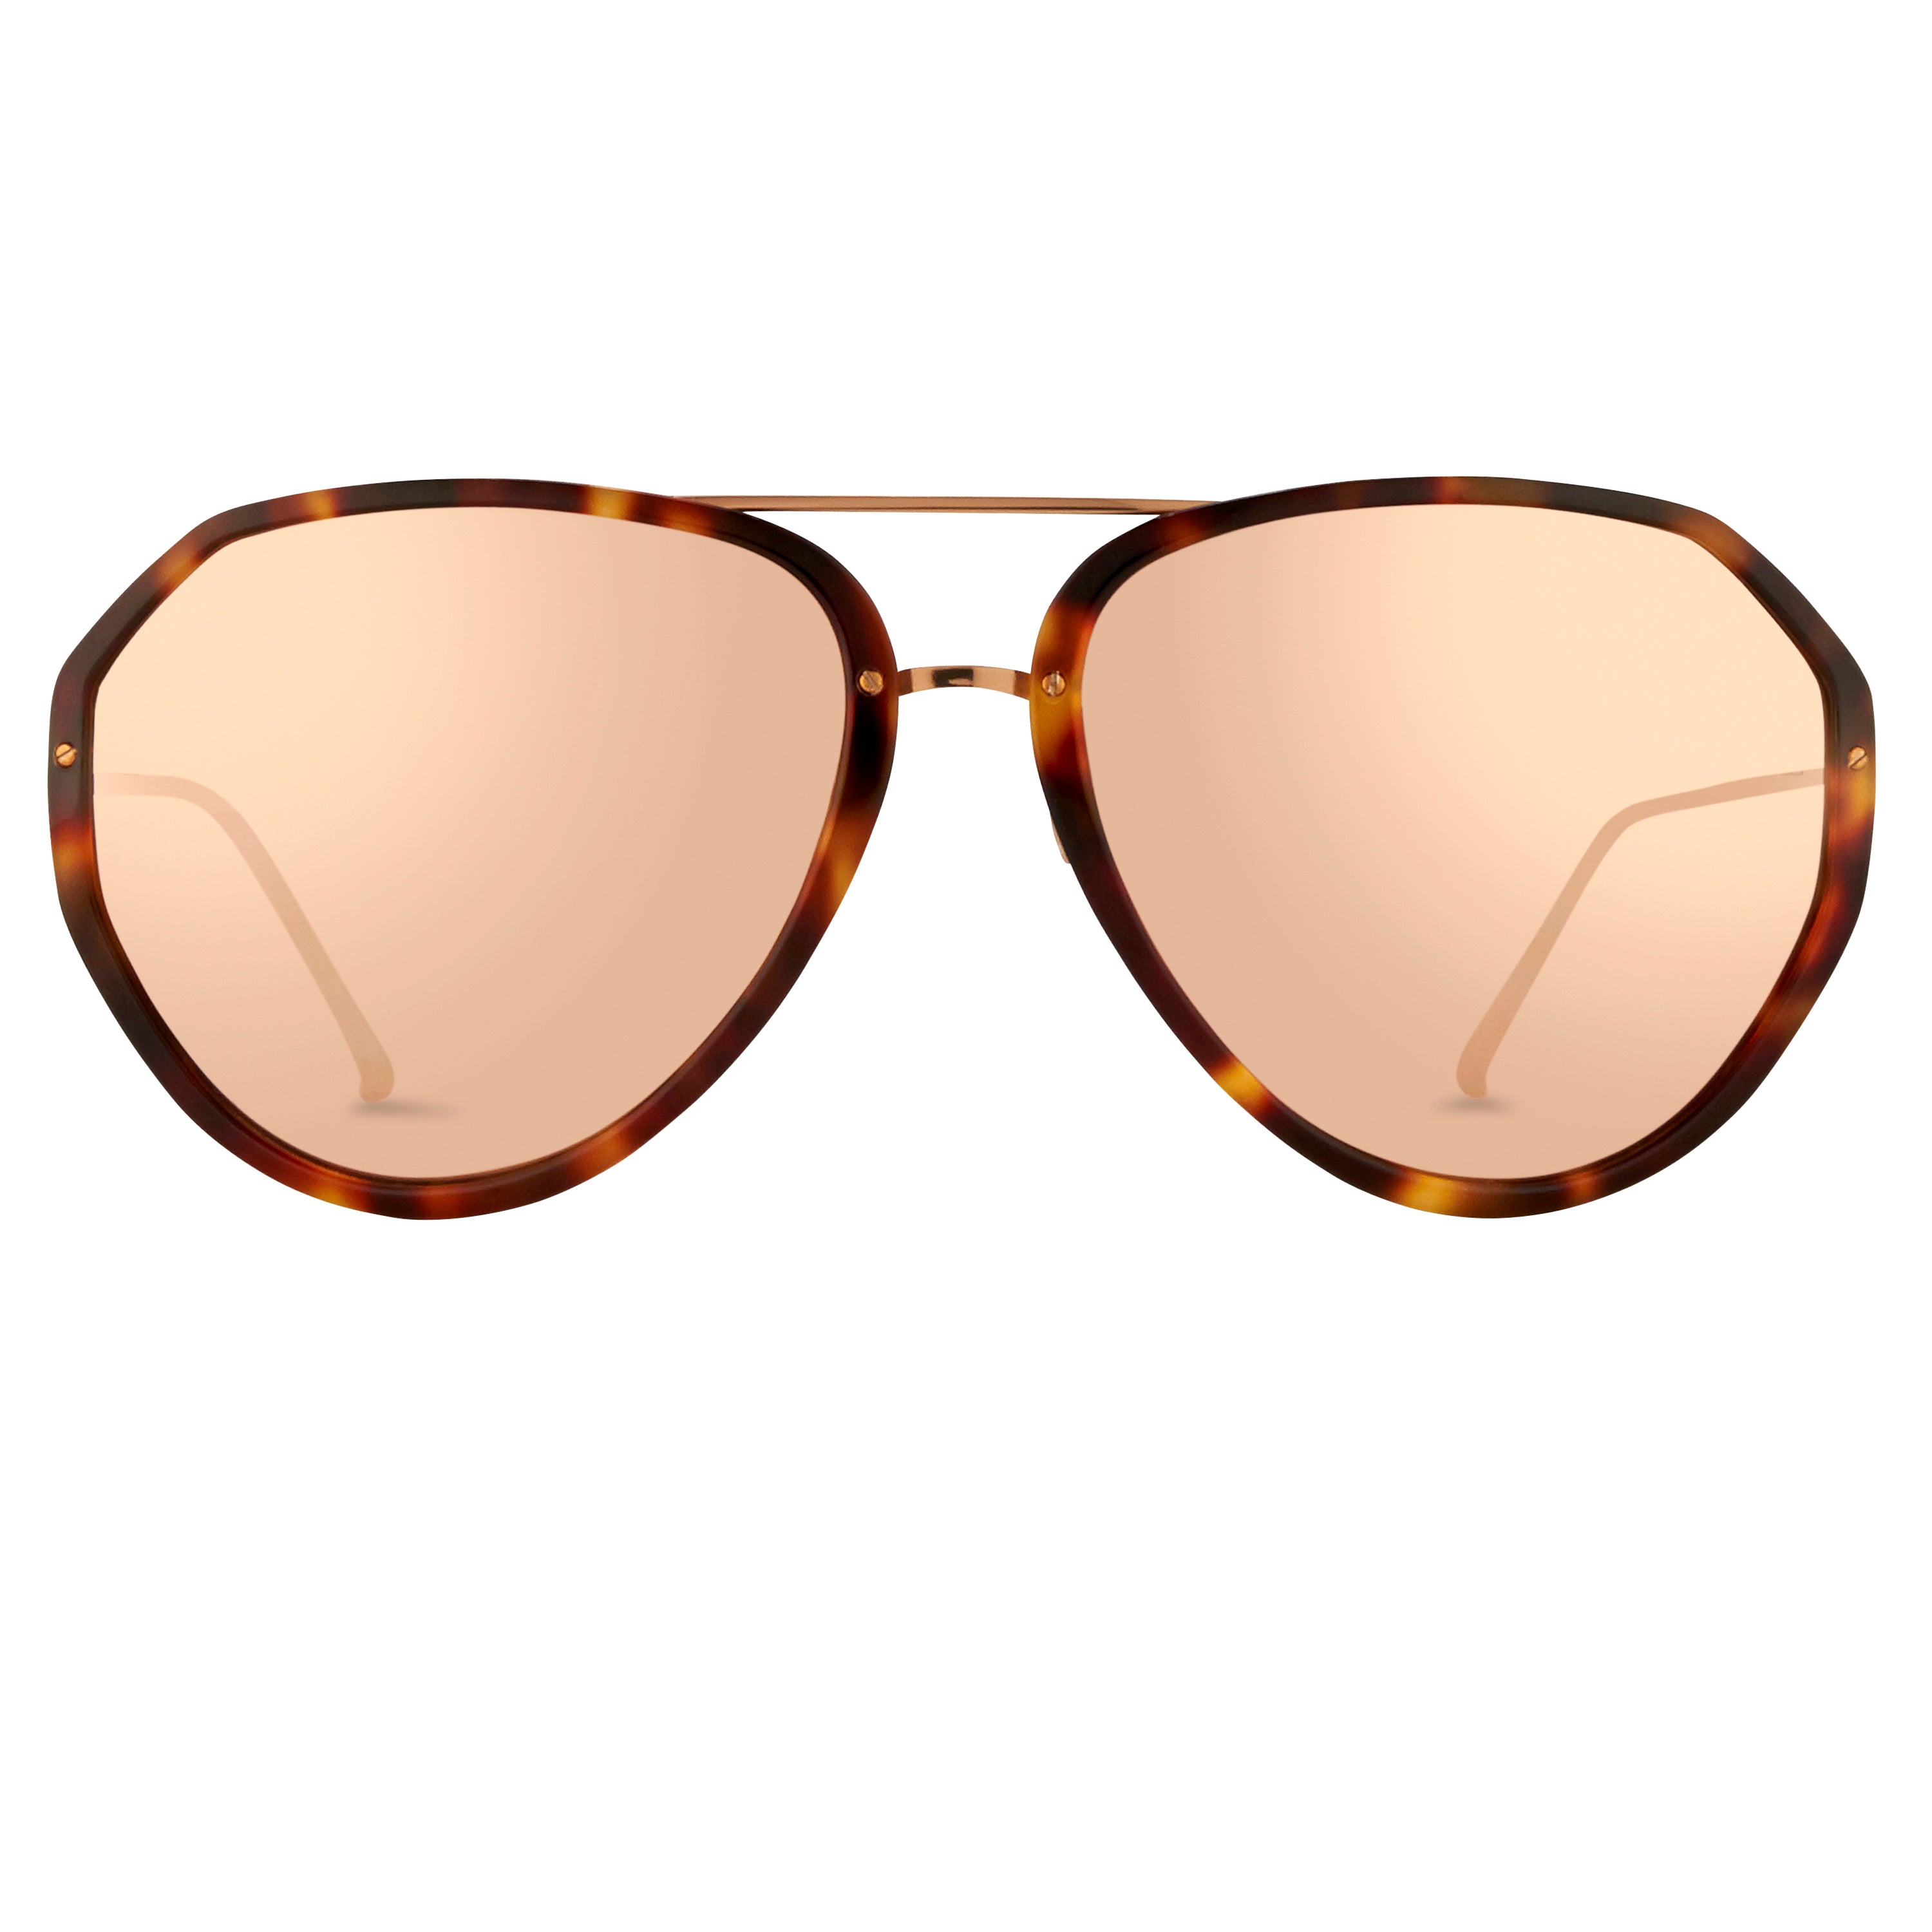 Linda Farrow - Joni Aviator Sunglasses in Rose Gold and Platinum Lenses - Women - Adult - LFL1055C4SUN